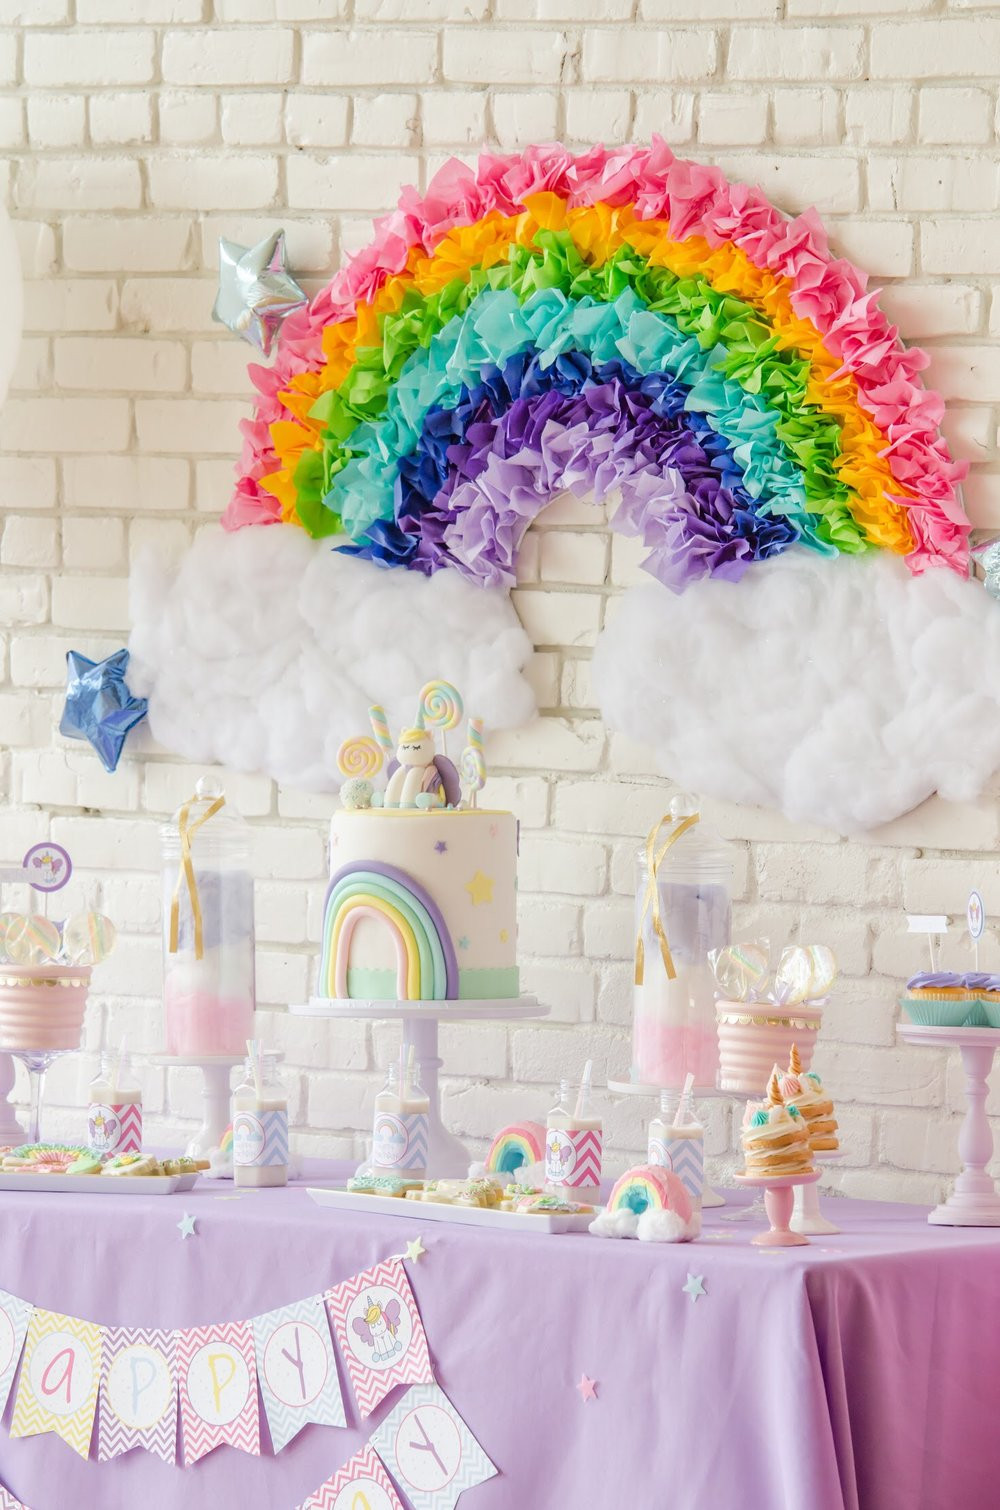 Rainbow Unicorn Birthday Party Ideas
 The Sweetest Unicorn Birthday Party Free Printables